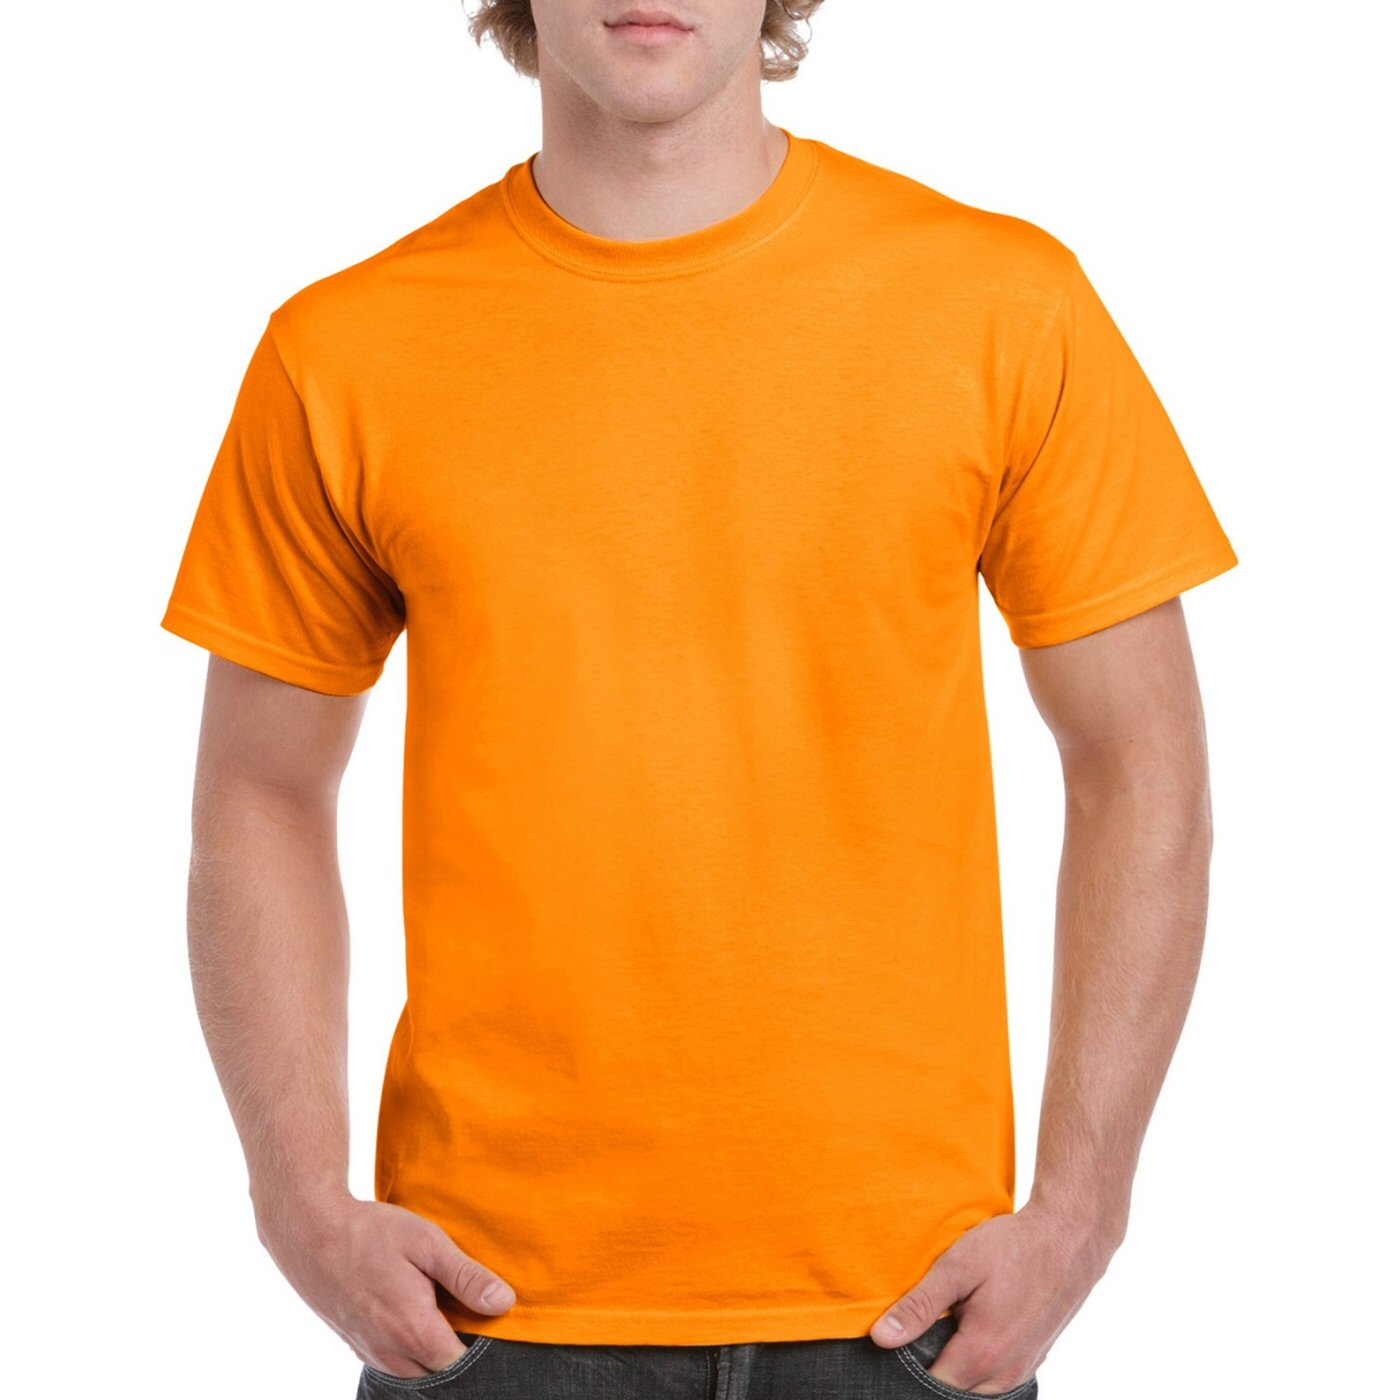 Noodlottig Onzeker amateur plain shirts online> OFF-60%